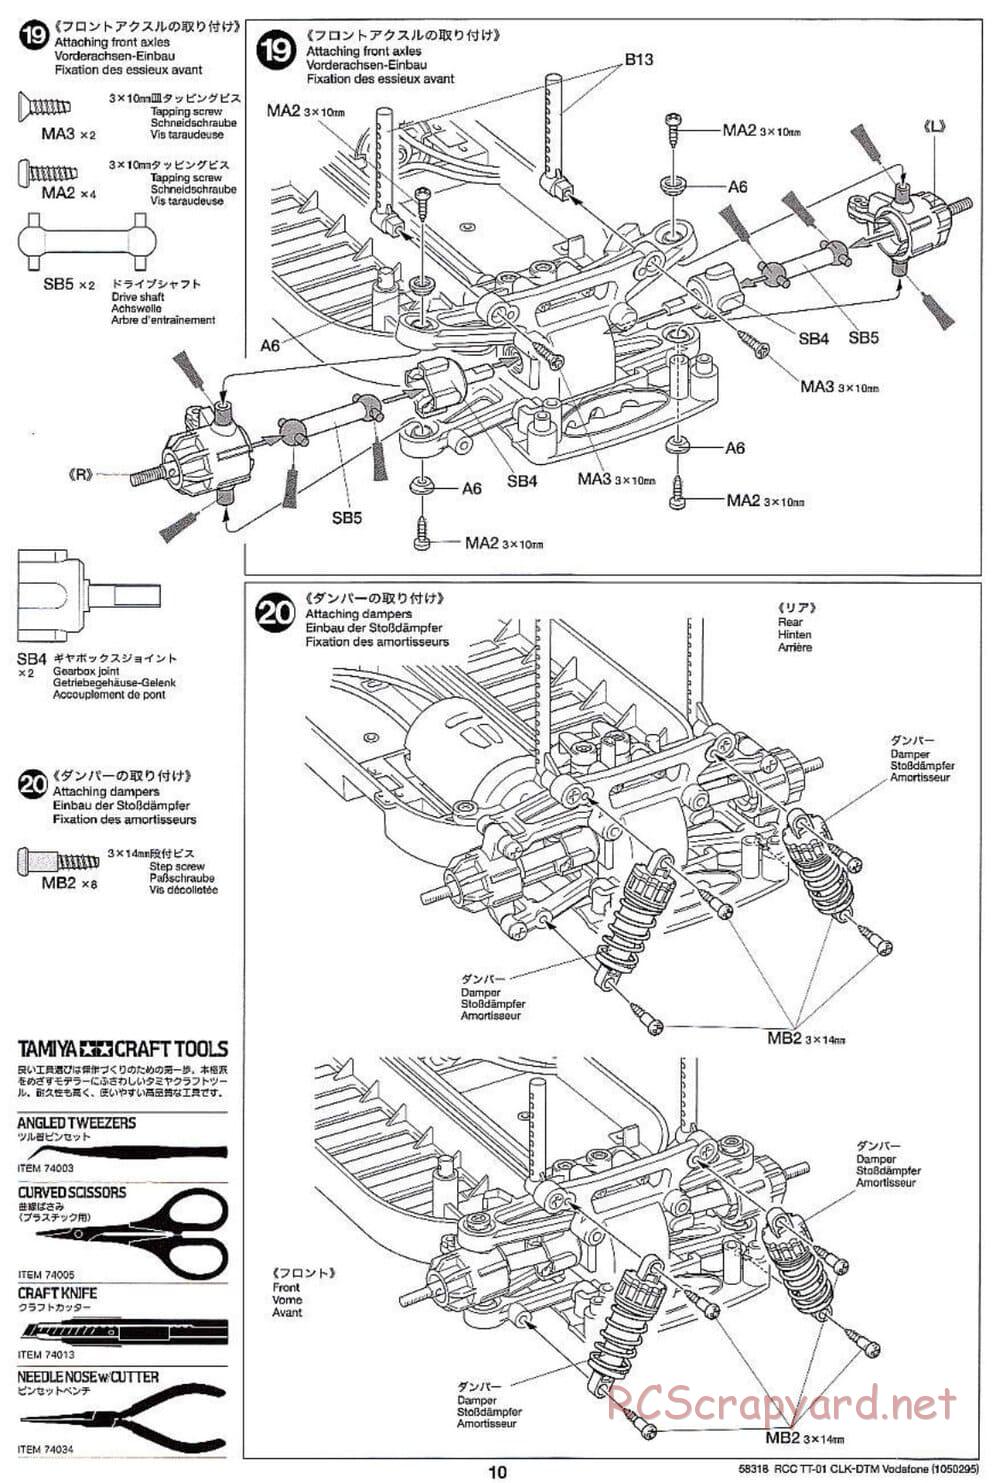 Tamiya - Mercedes-Benz CLK-DTM Team Vodafone AMG-Mercedes - TT-01 Chassis - Manual - Page 10